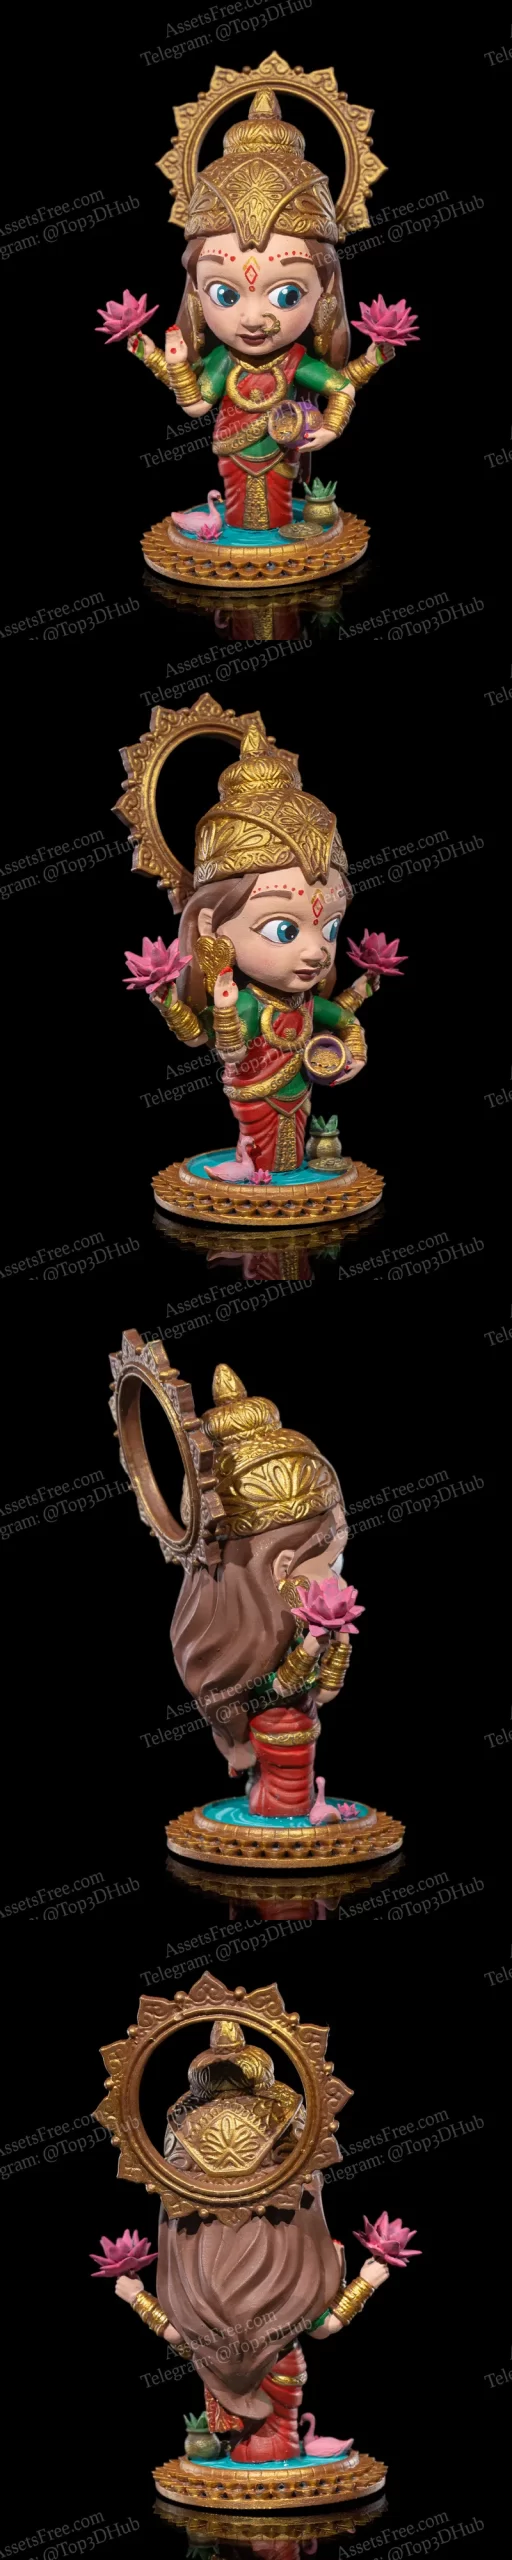 Chibi Lakshmi Goddess of Wealth